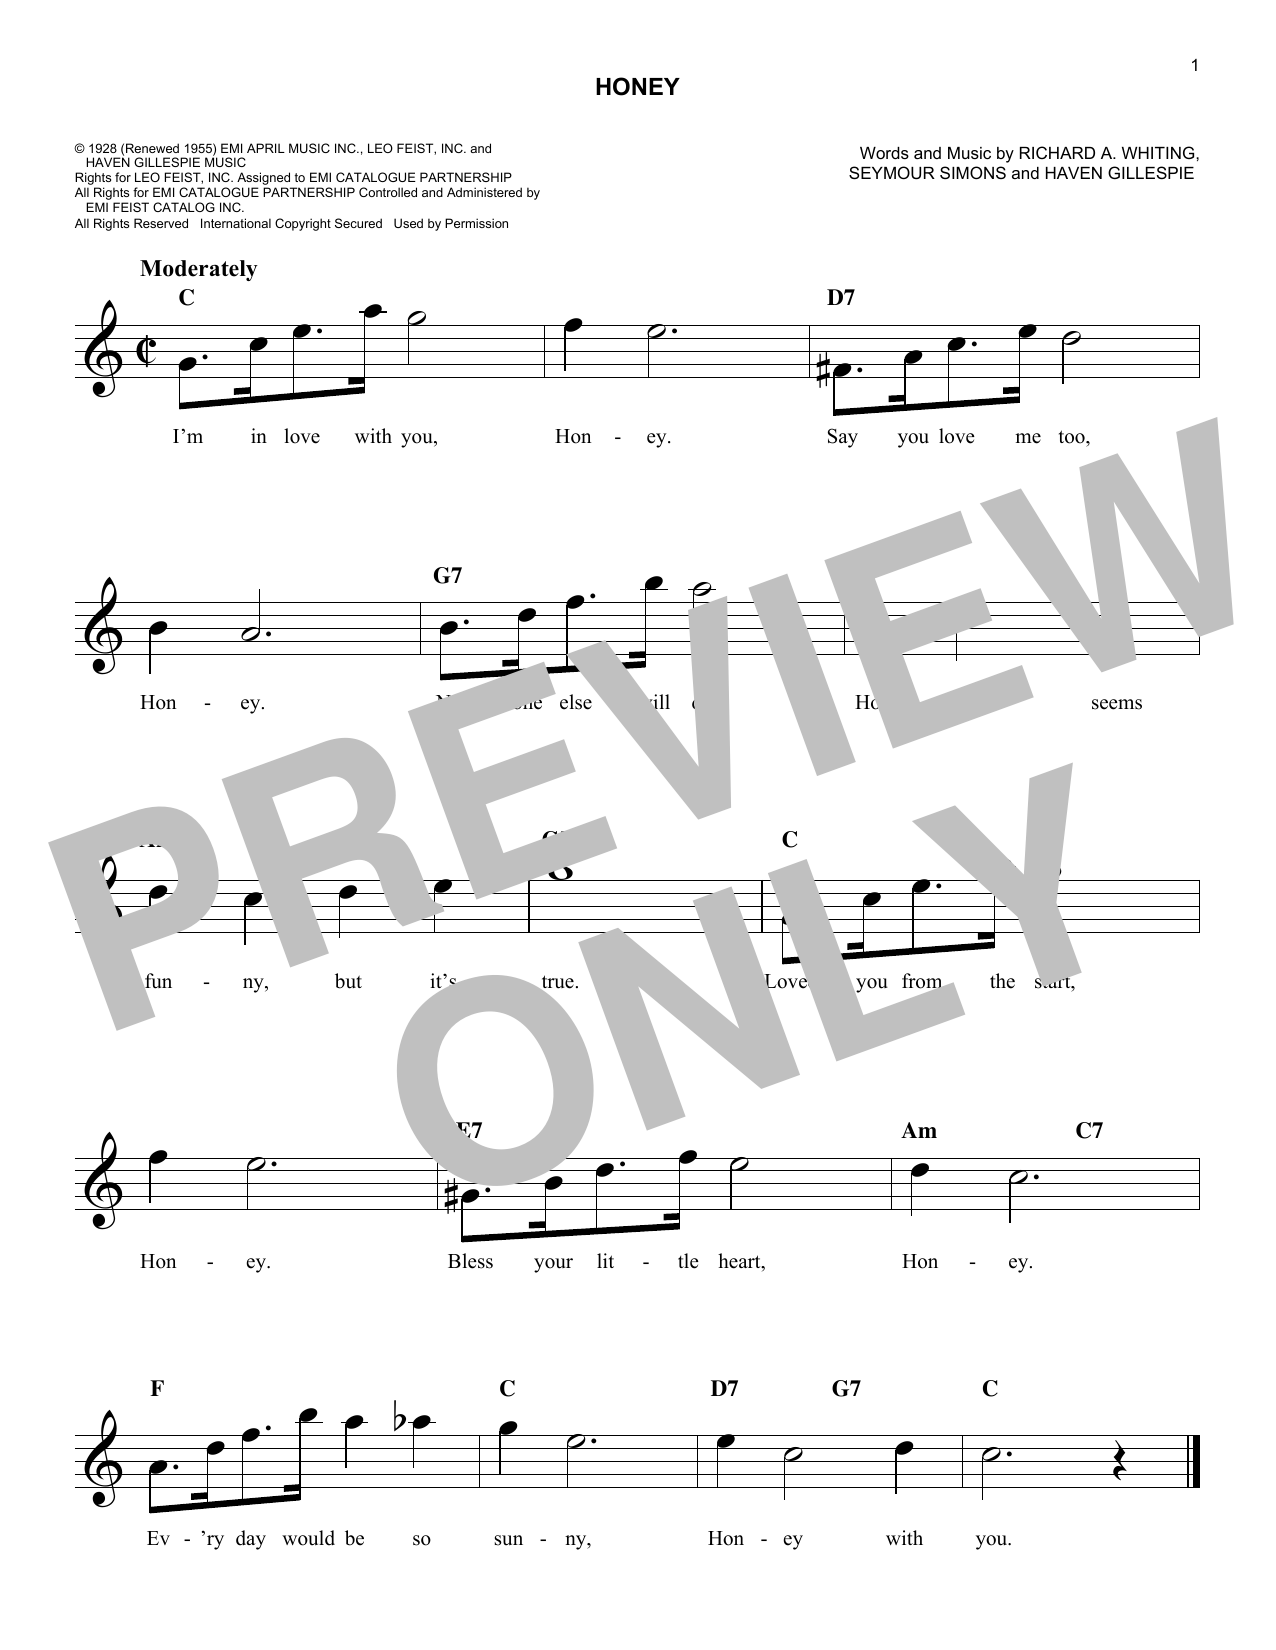 Seymour Simons Honey Sheet Music Notes & Chords for Melody Line, Lyrics & Chords - Download or Print PDF